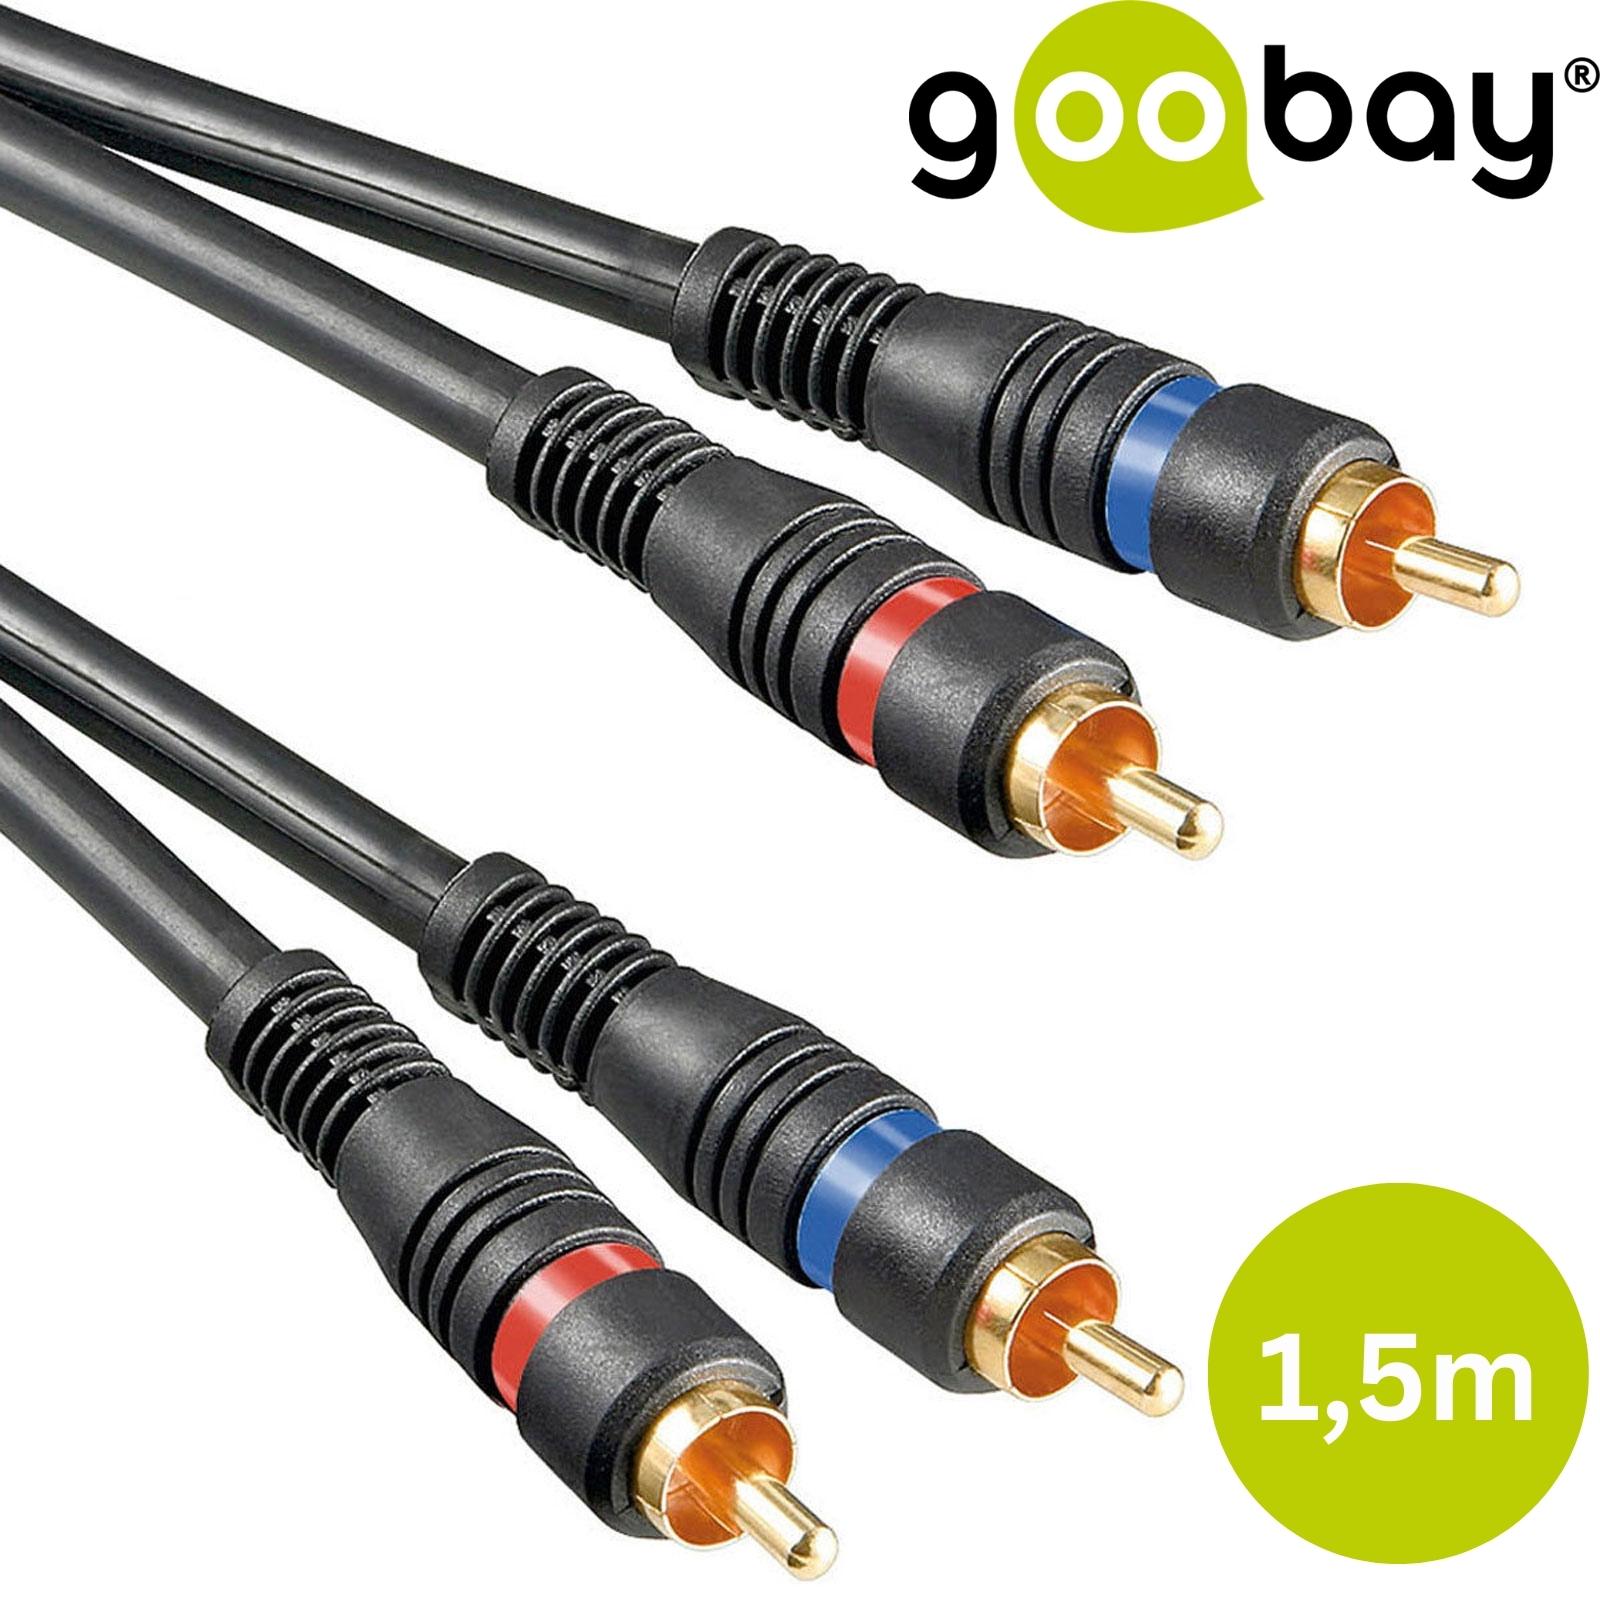 Goobay® 1,5m Cinch | Stereo Anschlusskabel RCA Stecker (Chinch) 2 Audio Premium-Cable Kabel HiFi